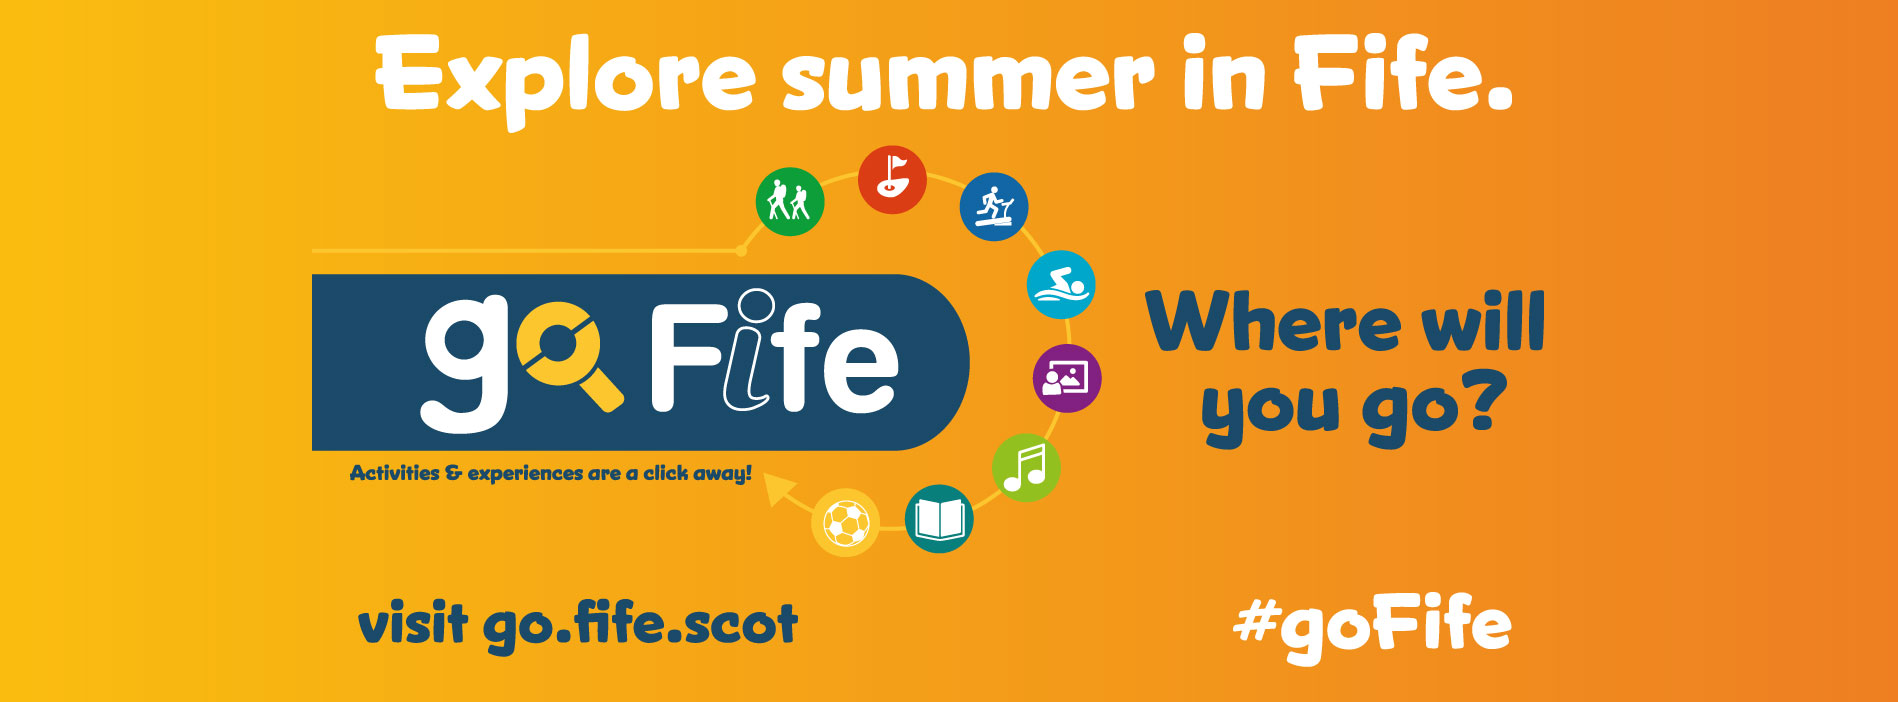 Explore summer in Fife. Go Fife. Where will you go? #goFife. Visit go.fife.scot 